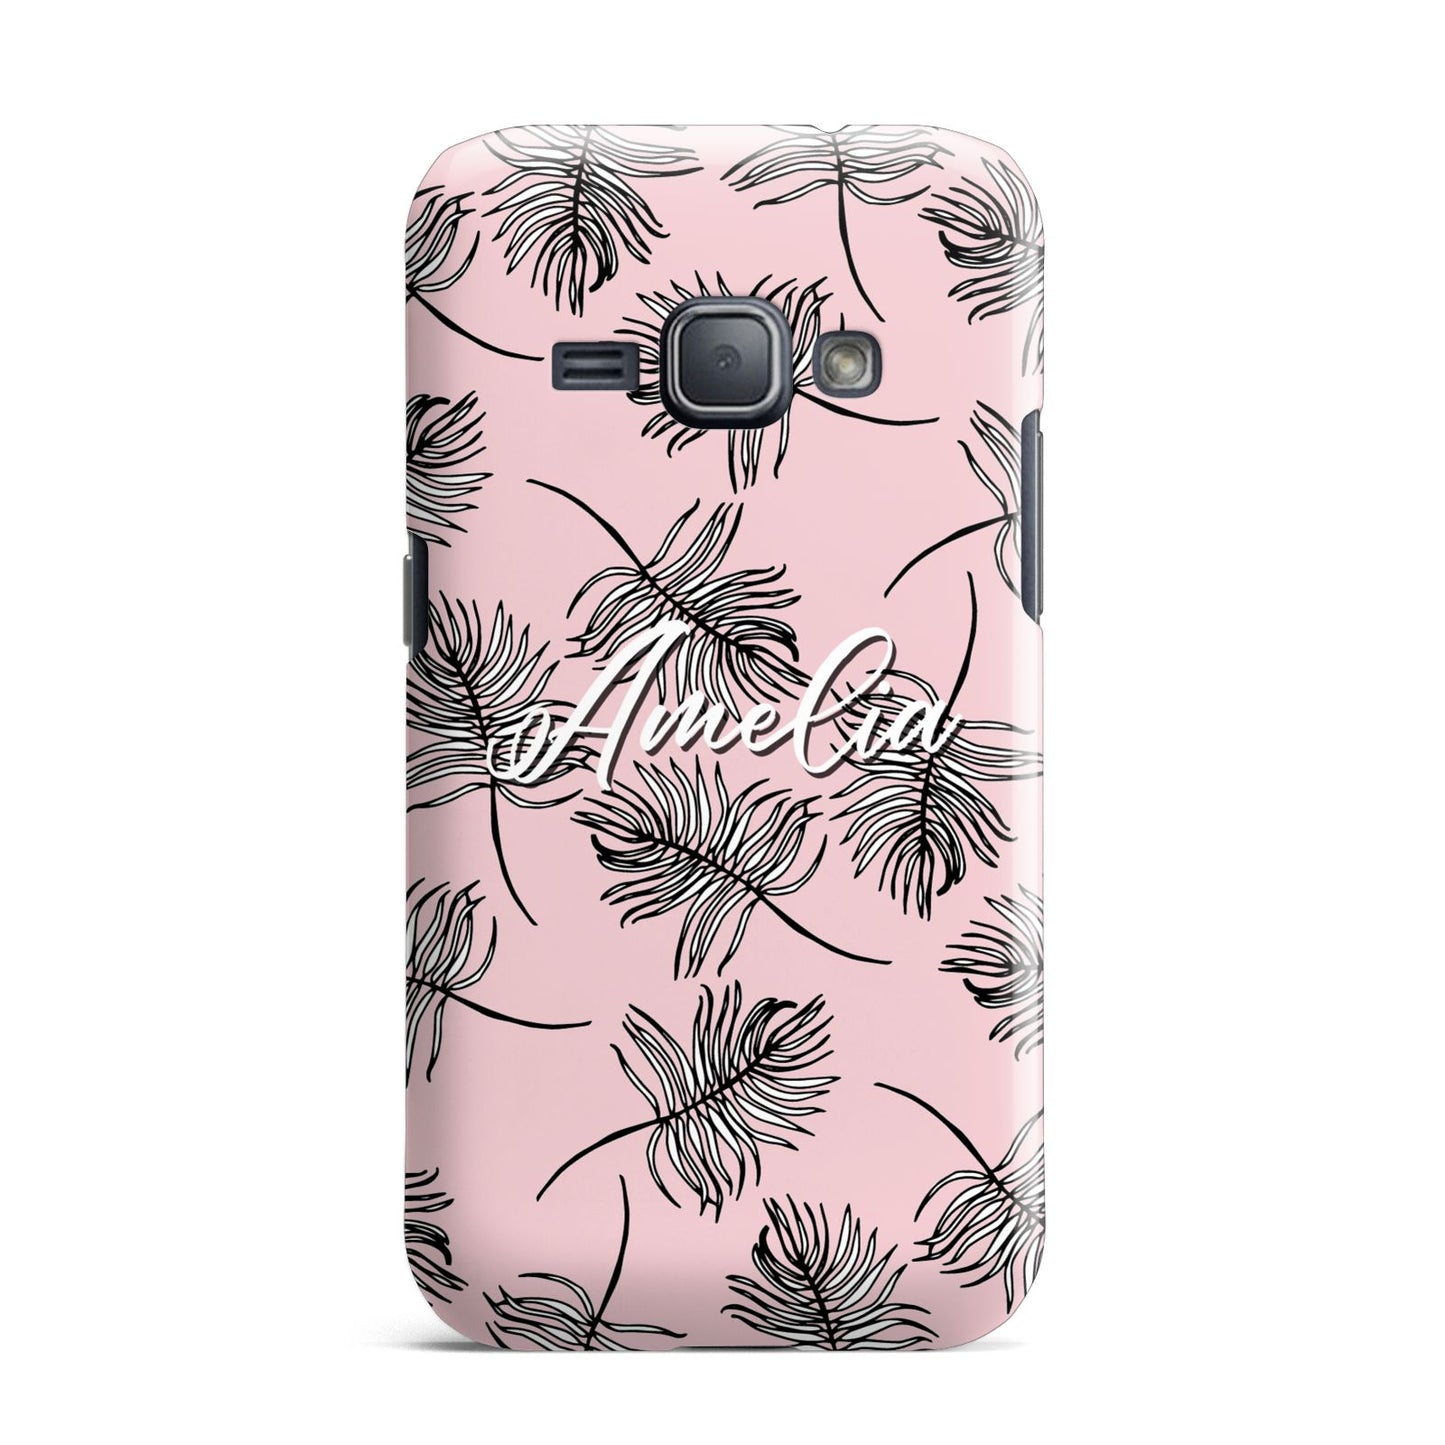 Personalised Pink Monochrome Tropical Leaf Samsung Galaxy J1 2016 Case